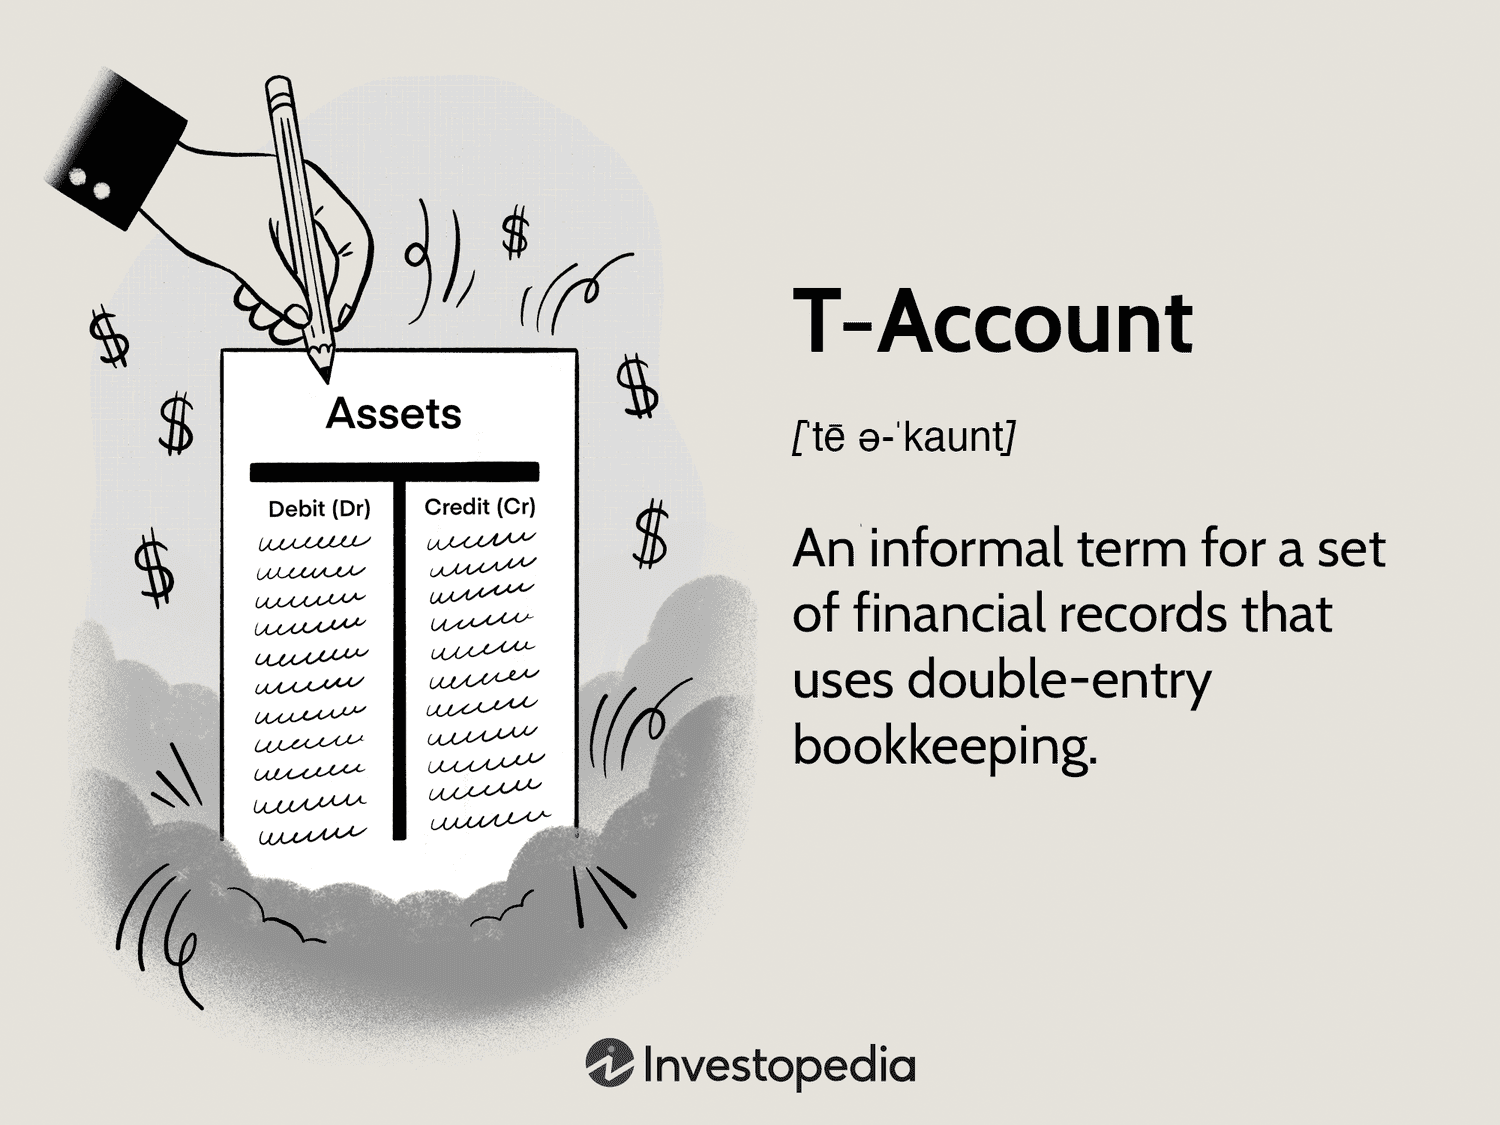 T-Accounts and Ledgers